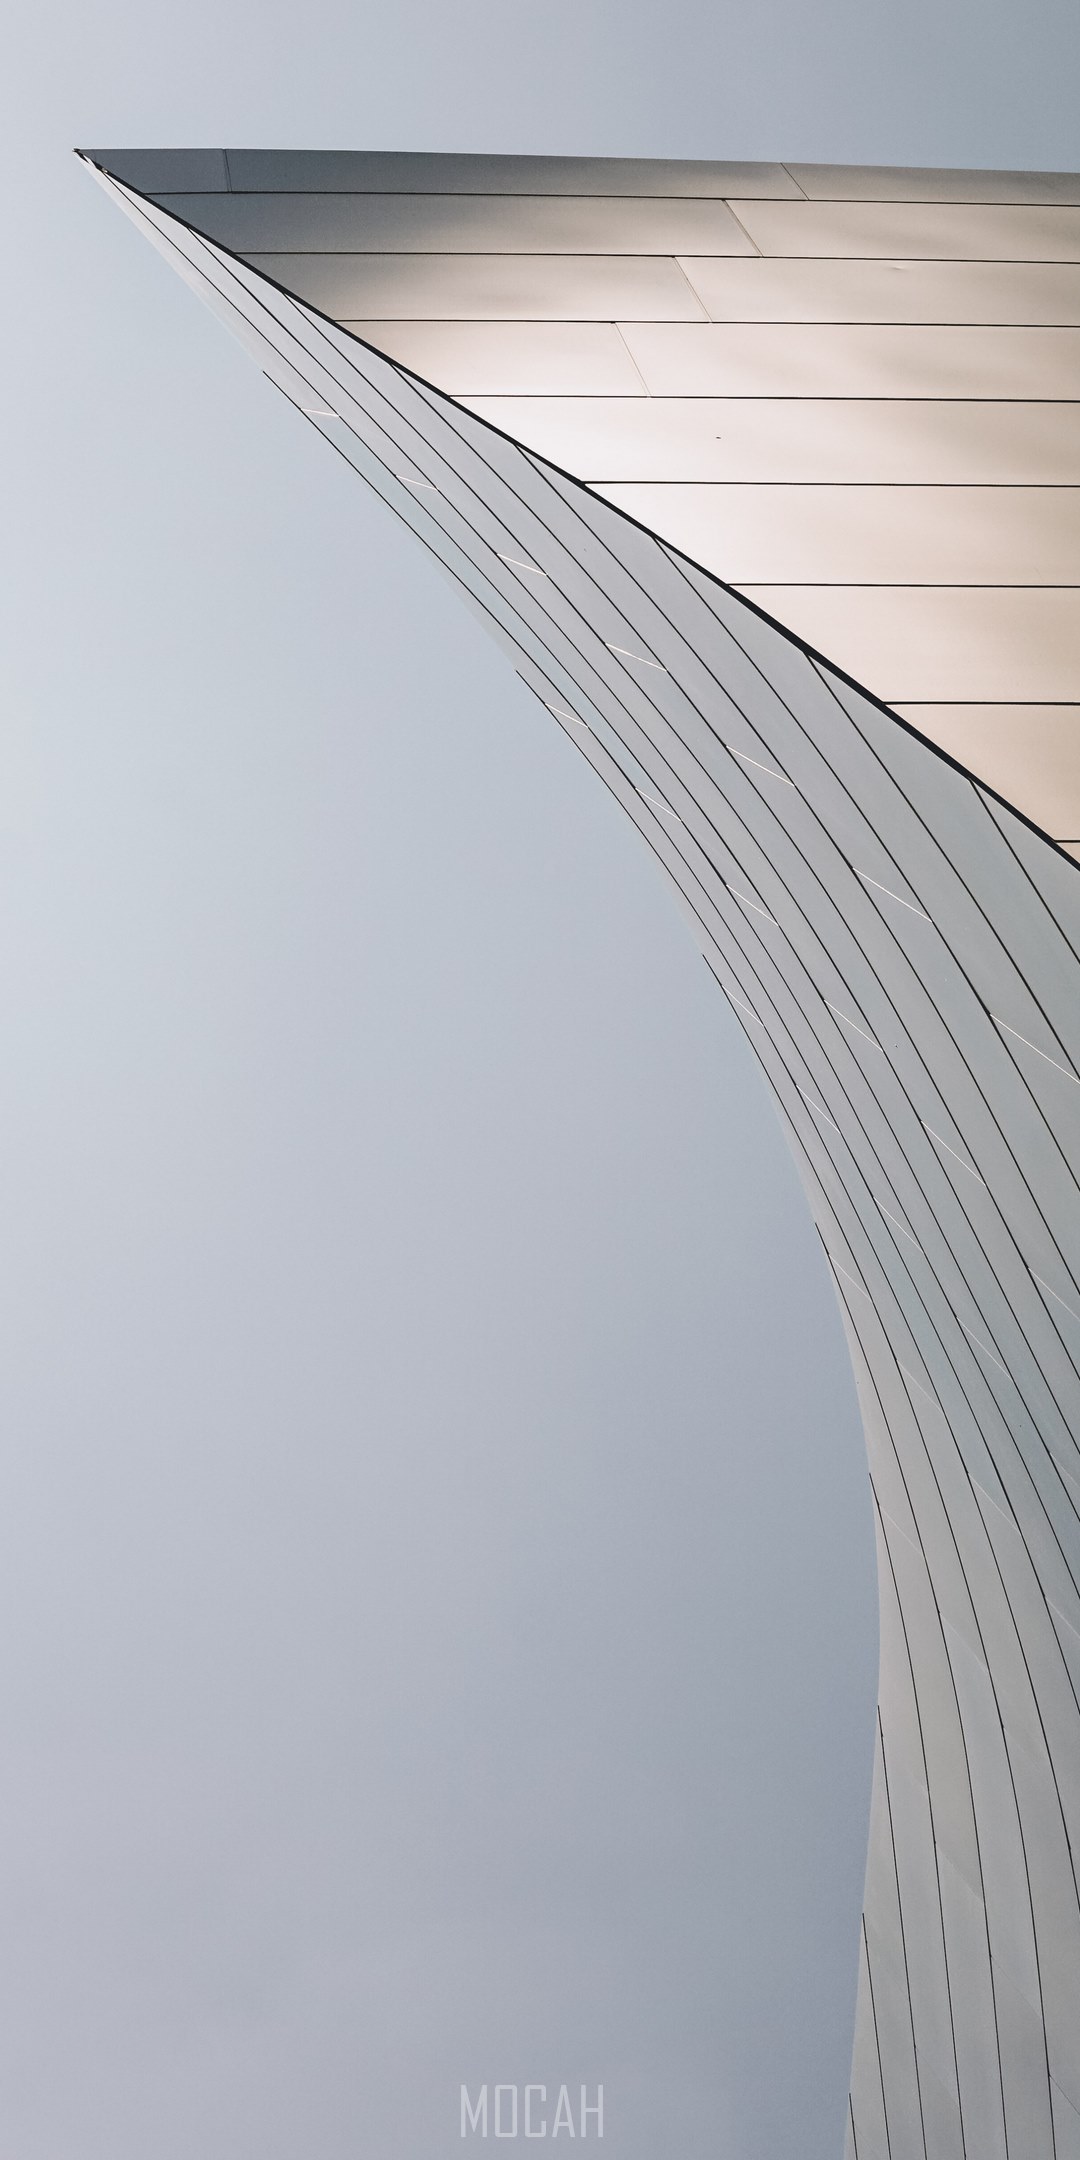 architecture sky curve and corner hd, LG Q6 wallpaper free download, 1080x2160. Mocah HD Wallpaper